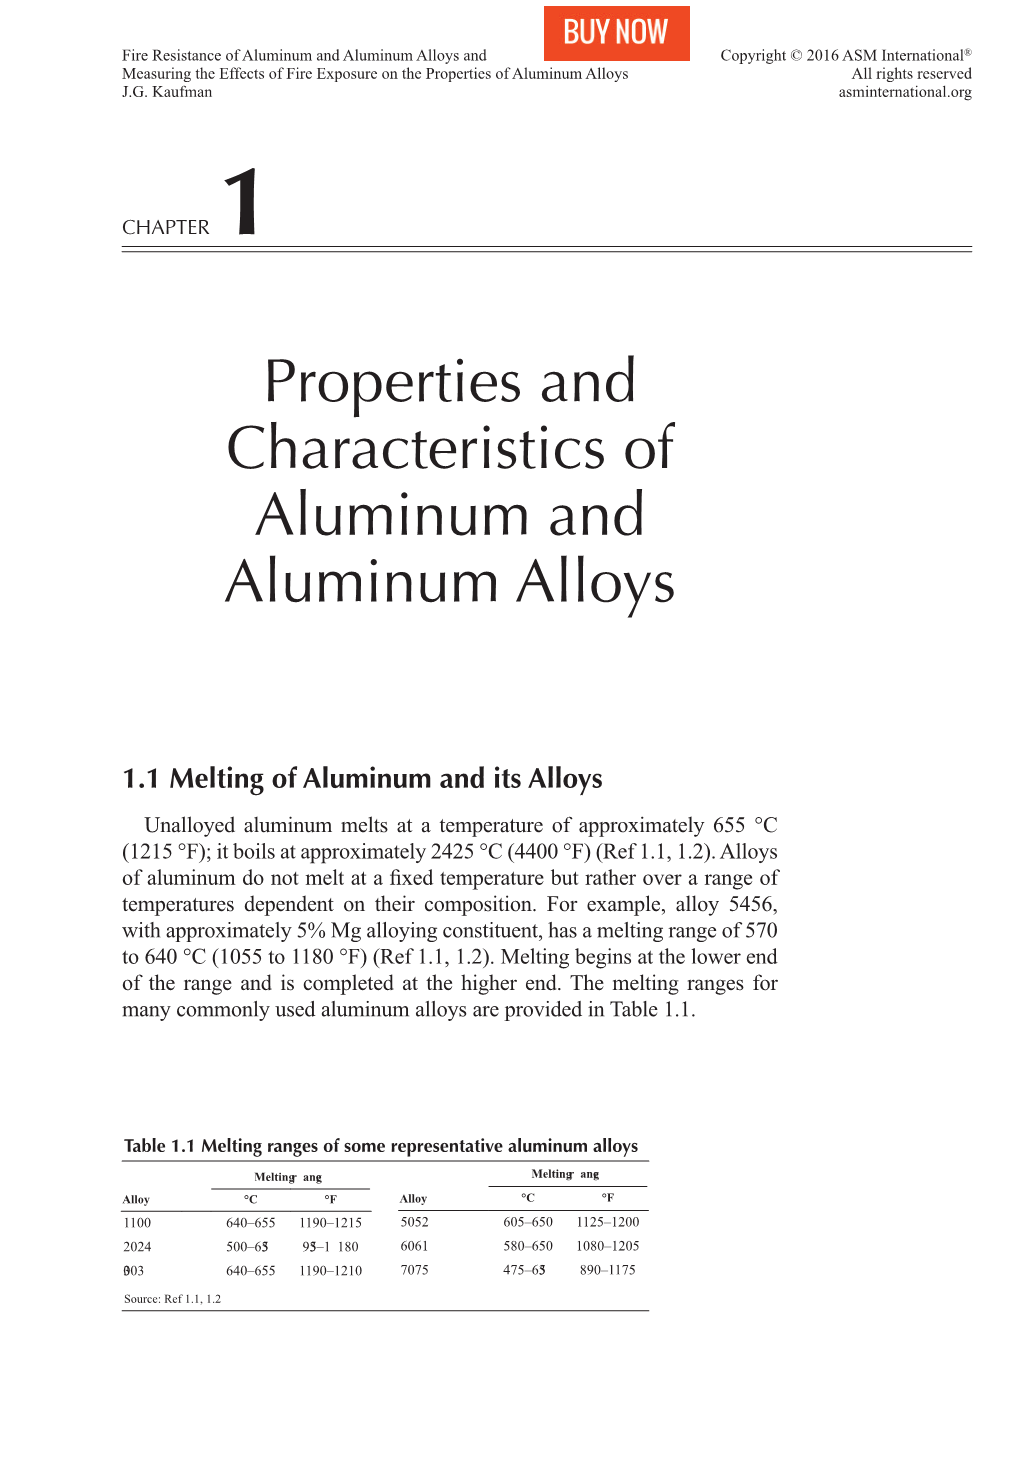 Properties and Characteristics of Aluminum and Aluminum Alloys